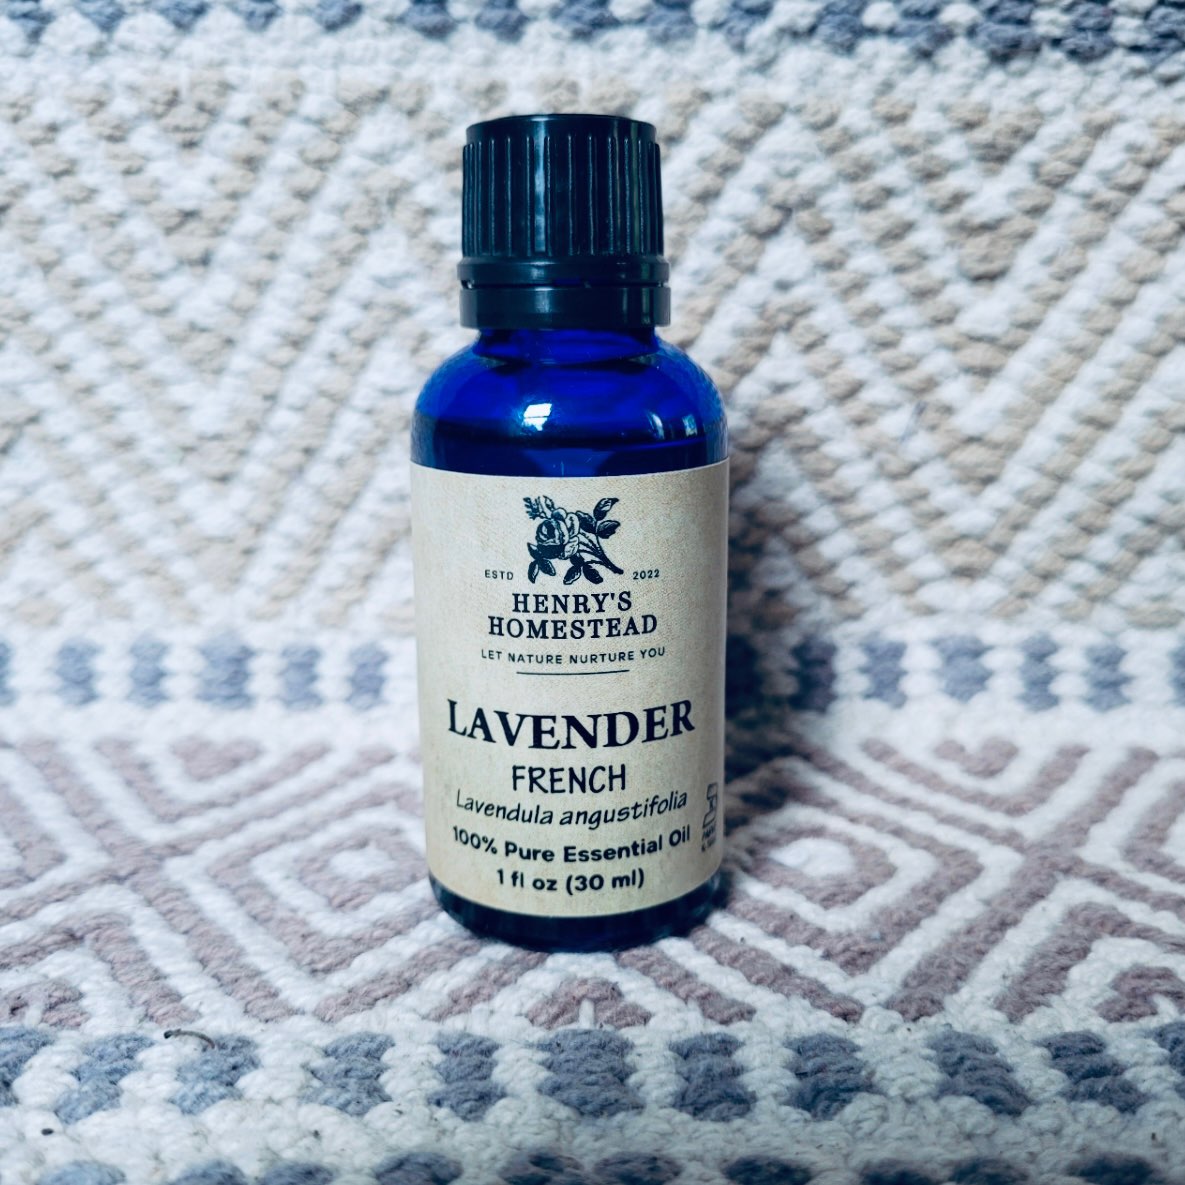 Lavender Essential Oil - Certified Organic - 100% Pure Therapeutic Grade - 30ml